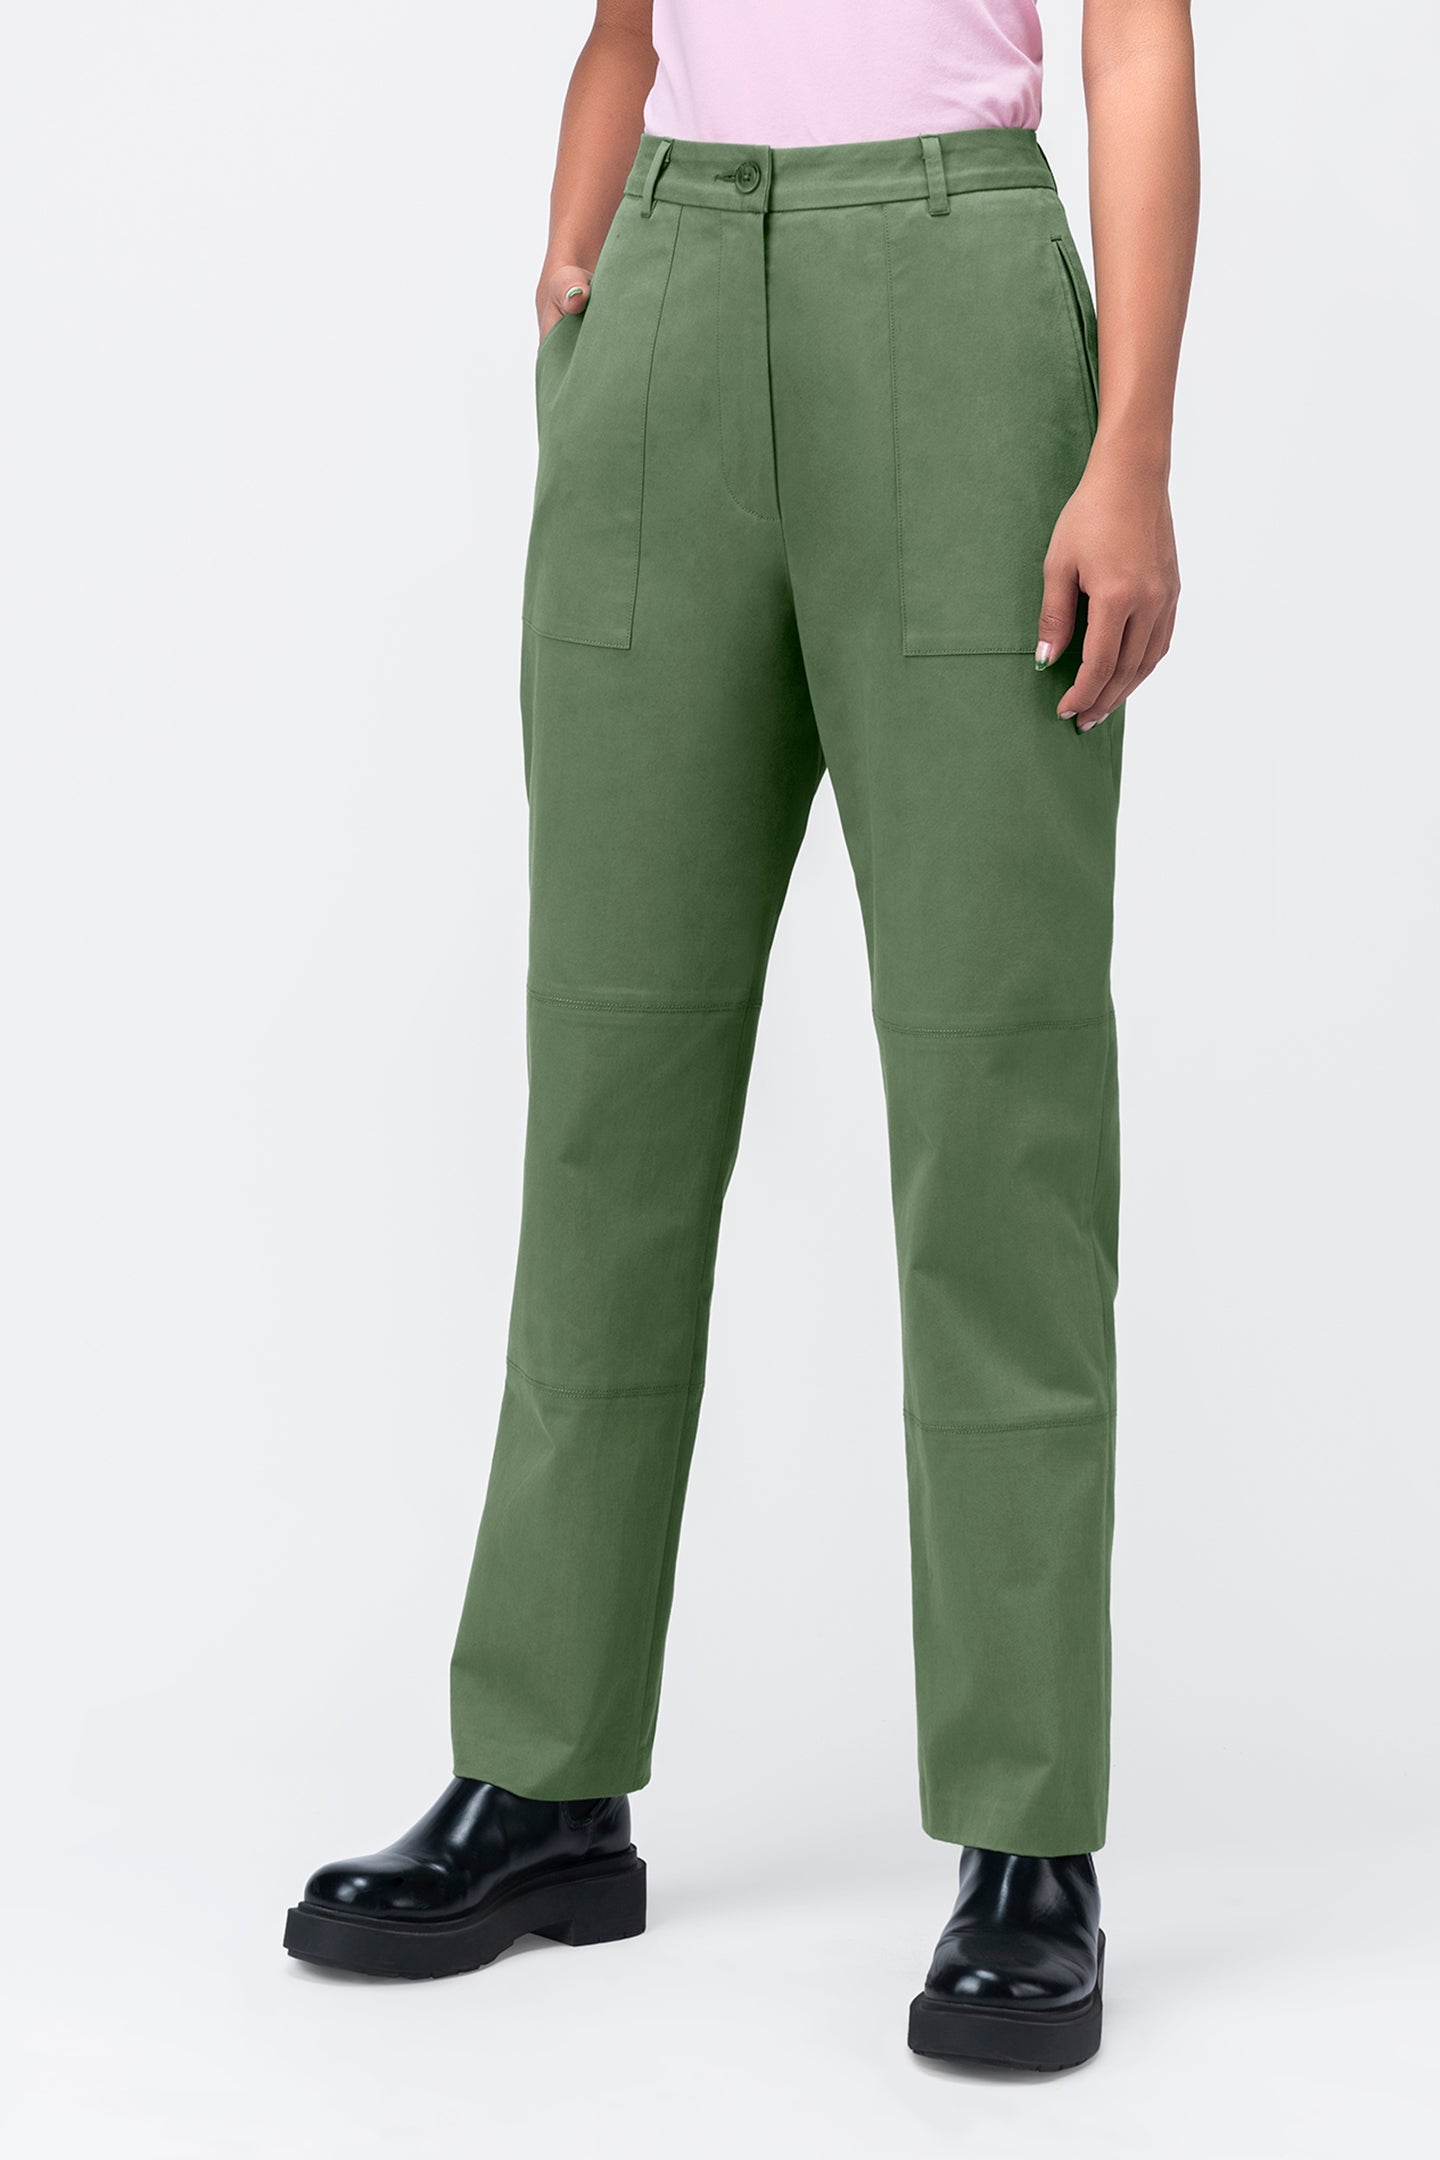 Utility Trouser - Navy Blue | Women's Trousers & Yoga Pants | Sweaty Betty